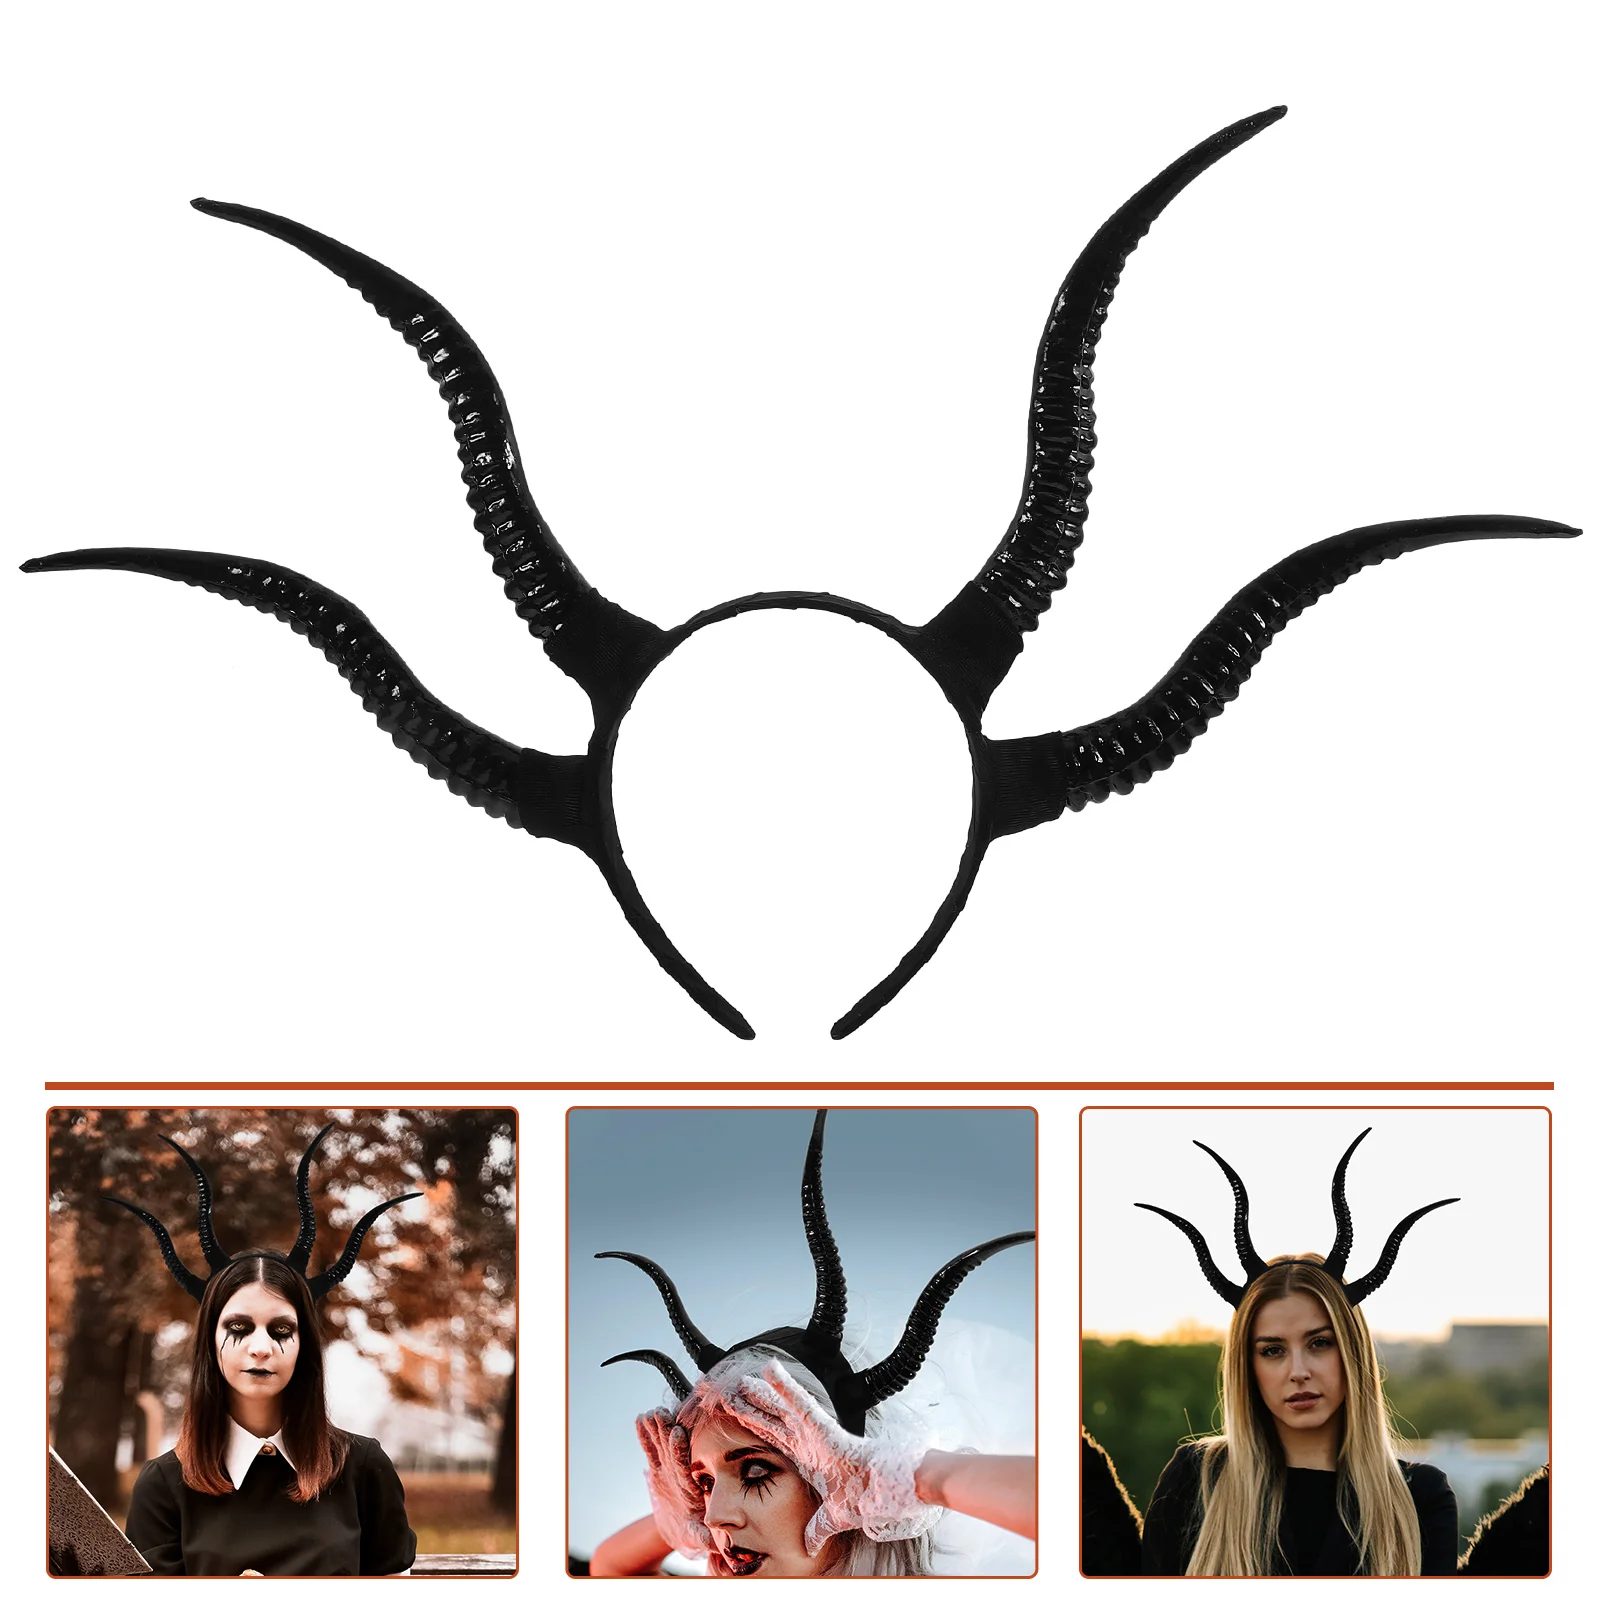 

Demon Horn Headband Costume Women Halloween Horns Cosplay Hairband Festival Ox Headbands Girls Decoration Clothes Outfits